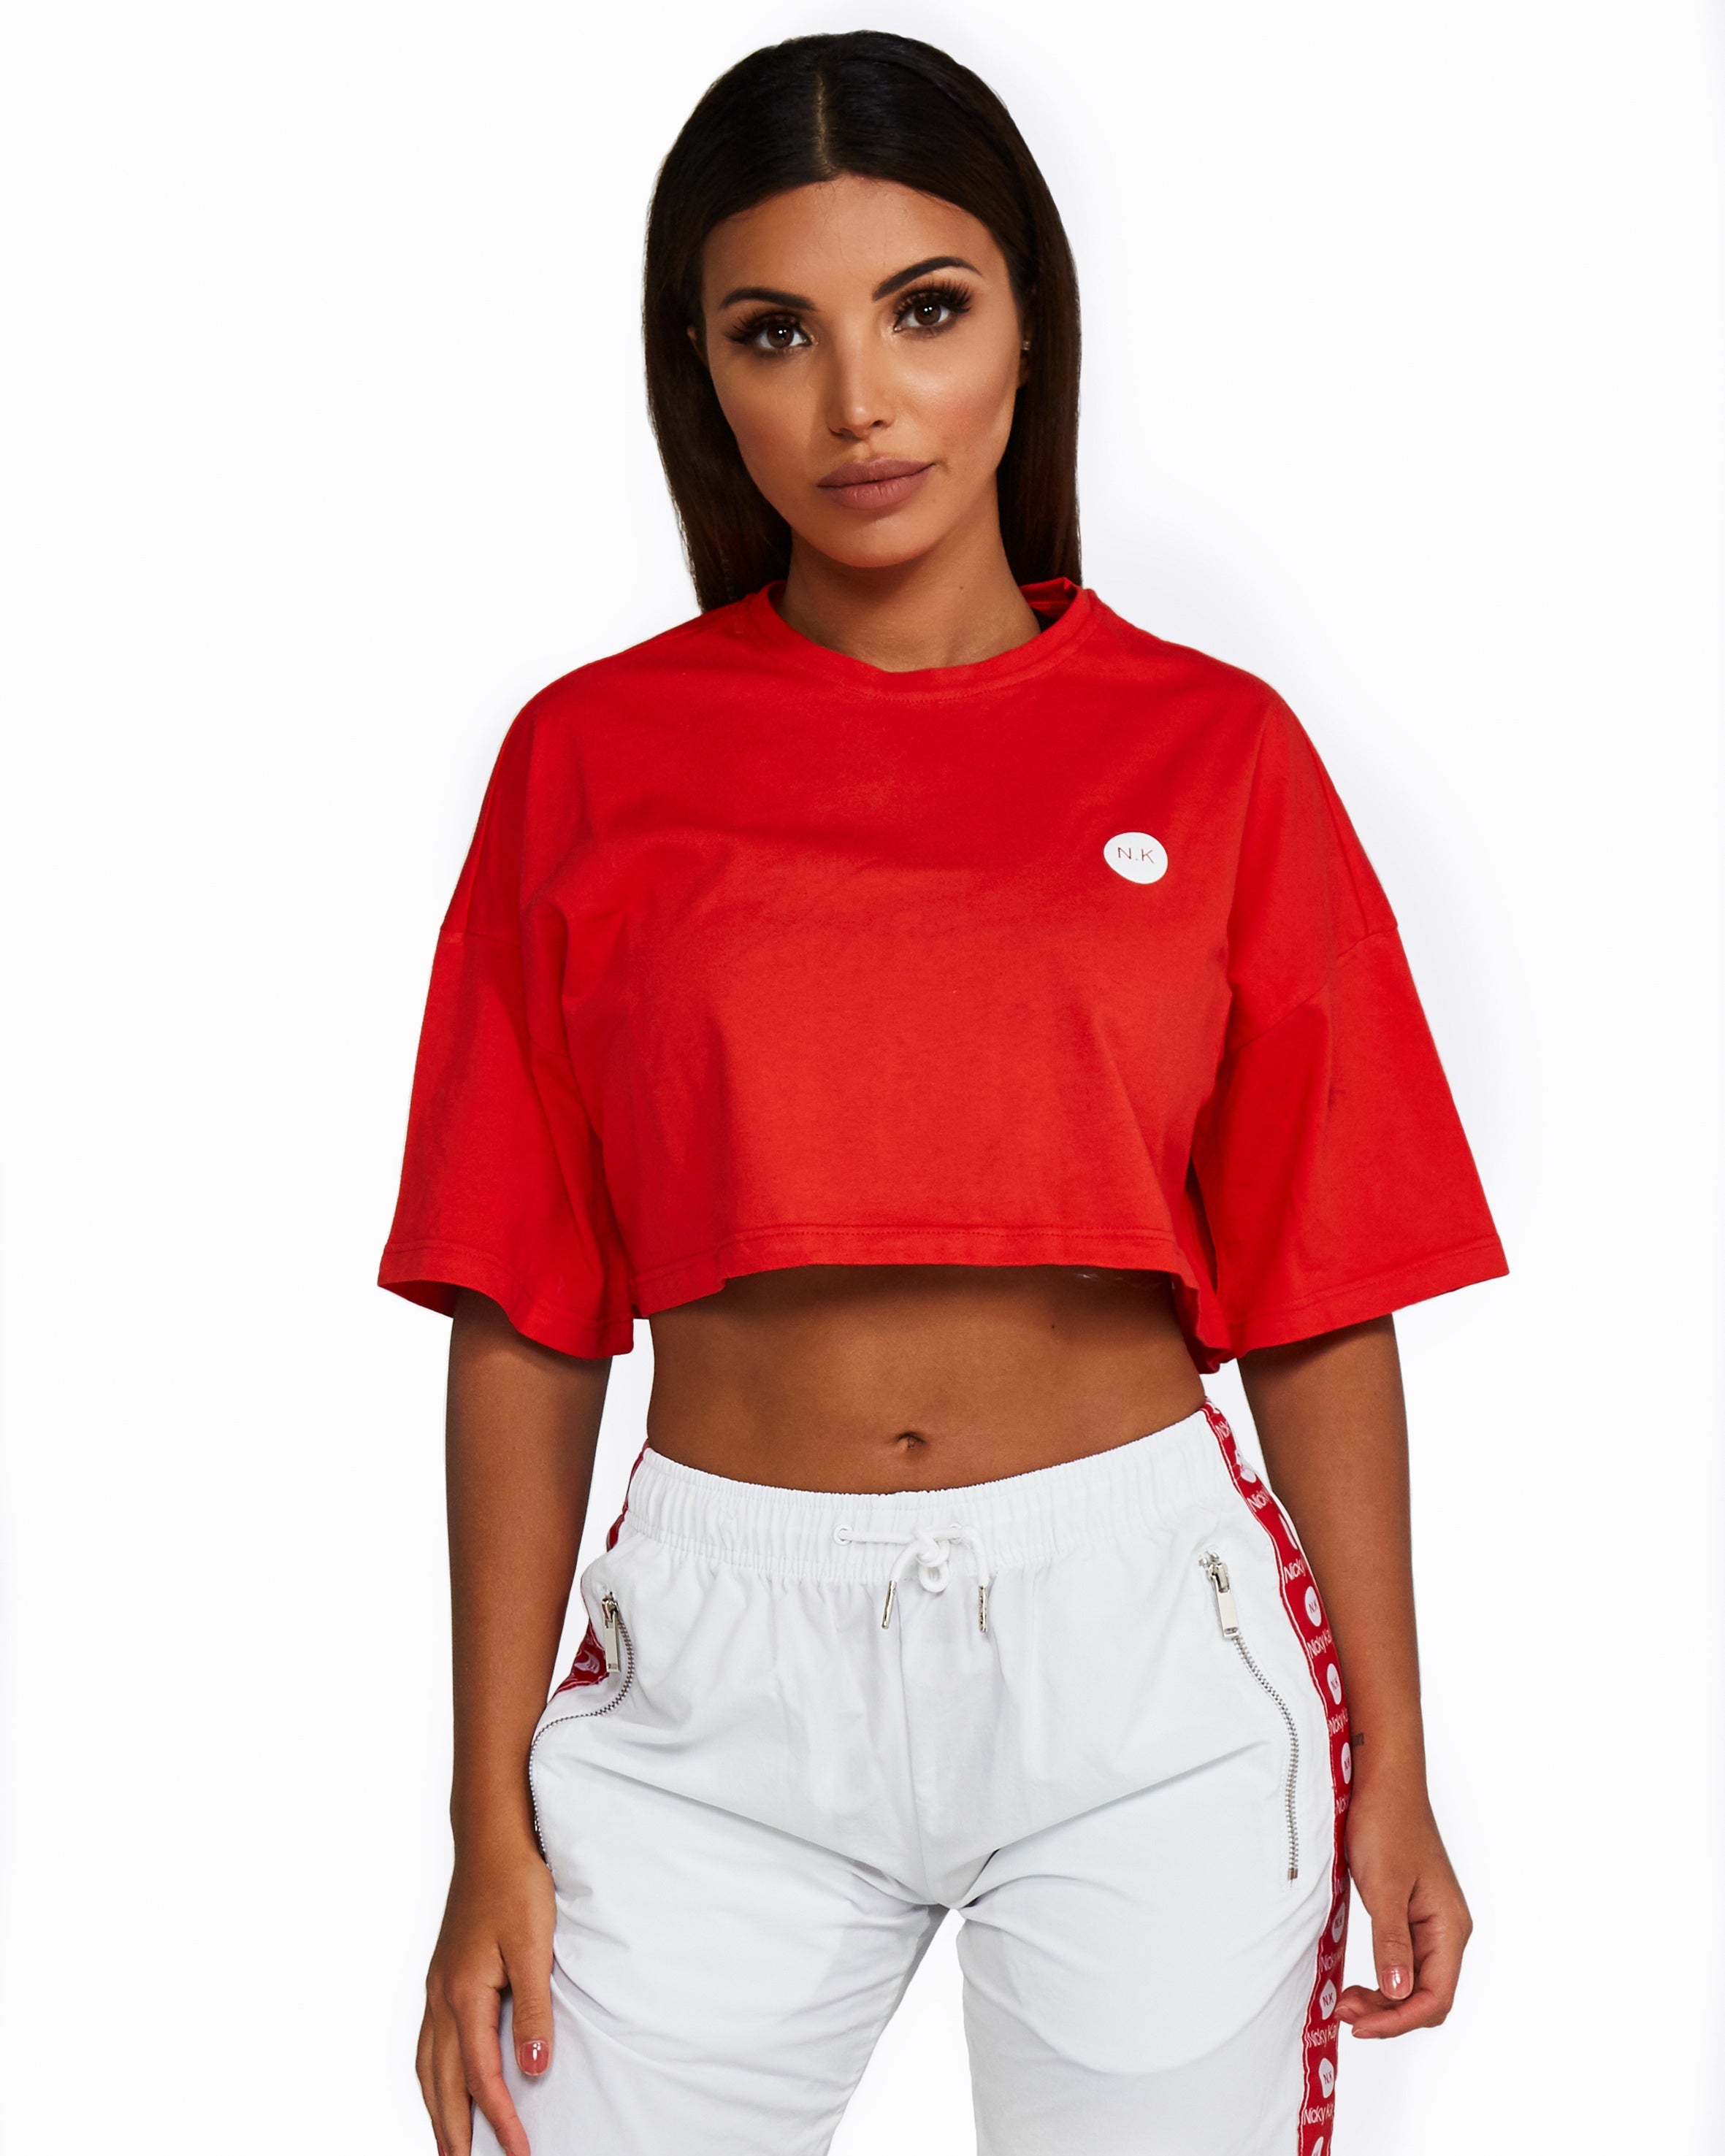 red crop tee shirt